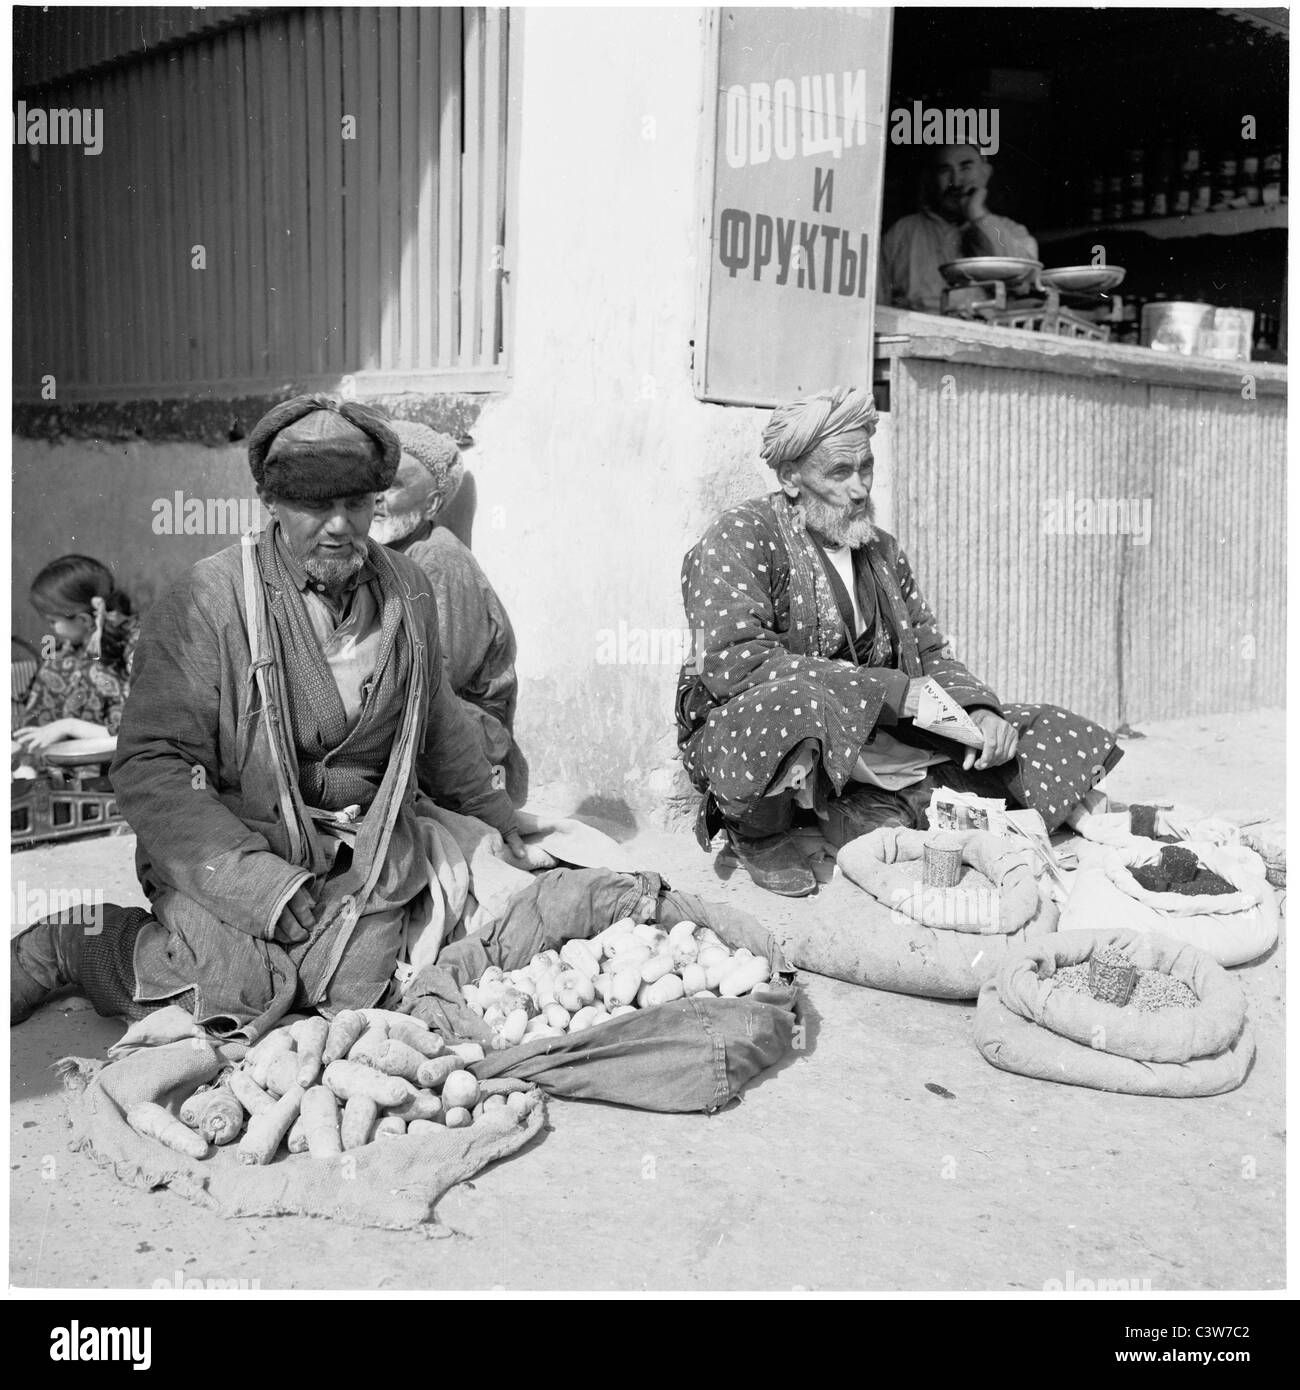 1950s. In this historical picture we see elderly uzbeks sitting on ground selling vegetables from sacks, Bukhara, Uzbekistan. Stock Photo